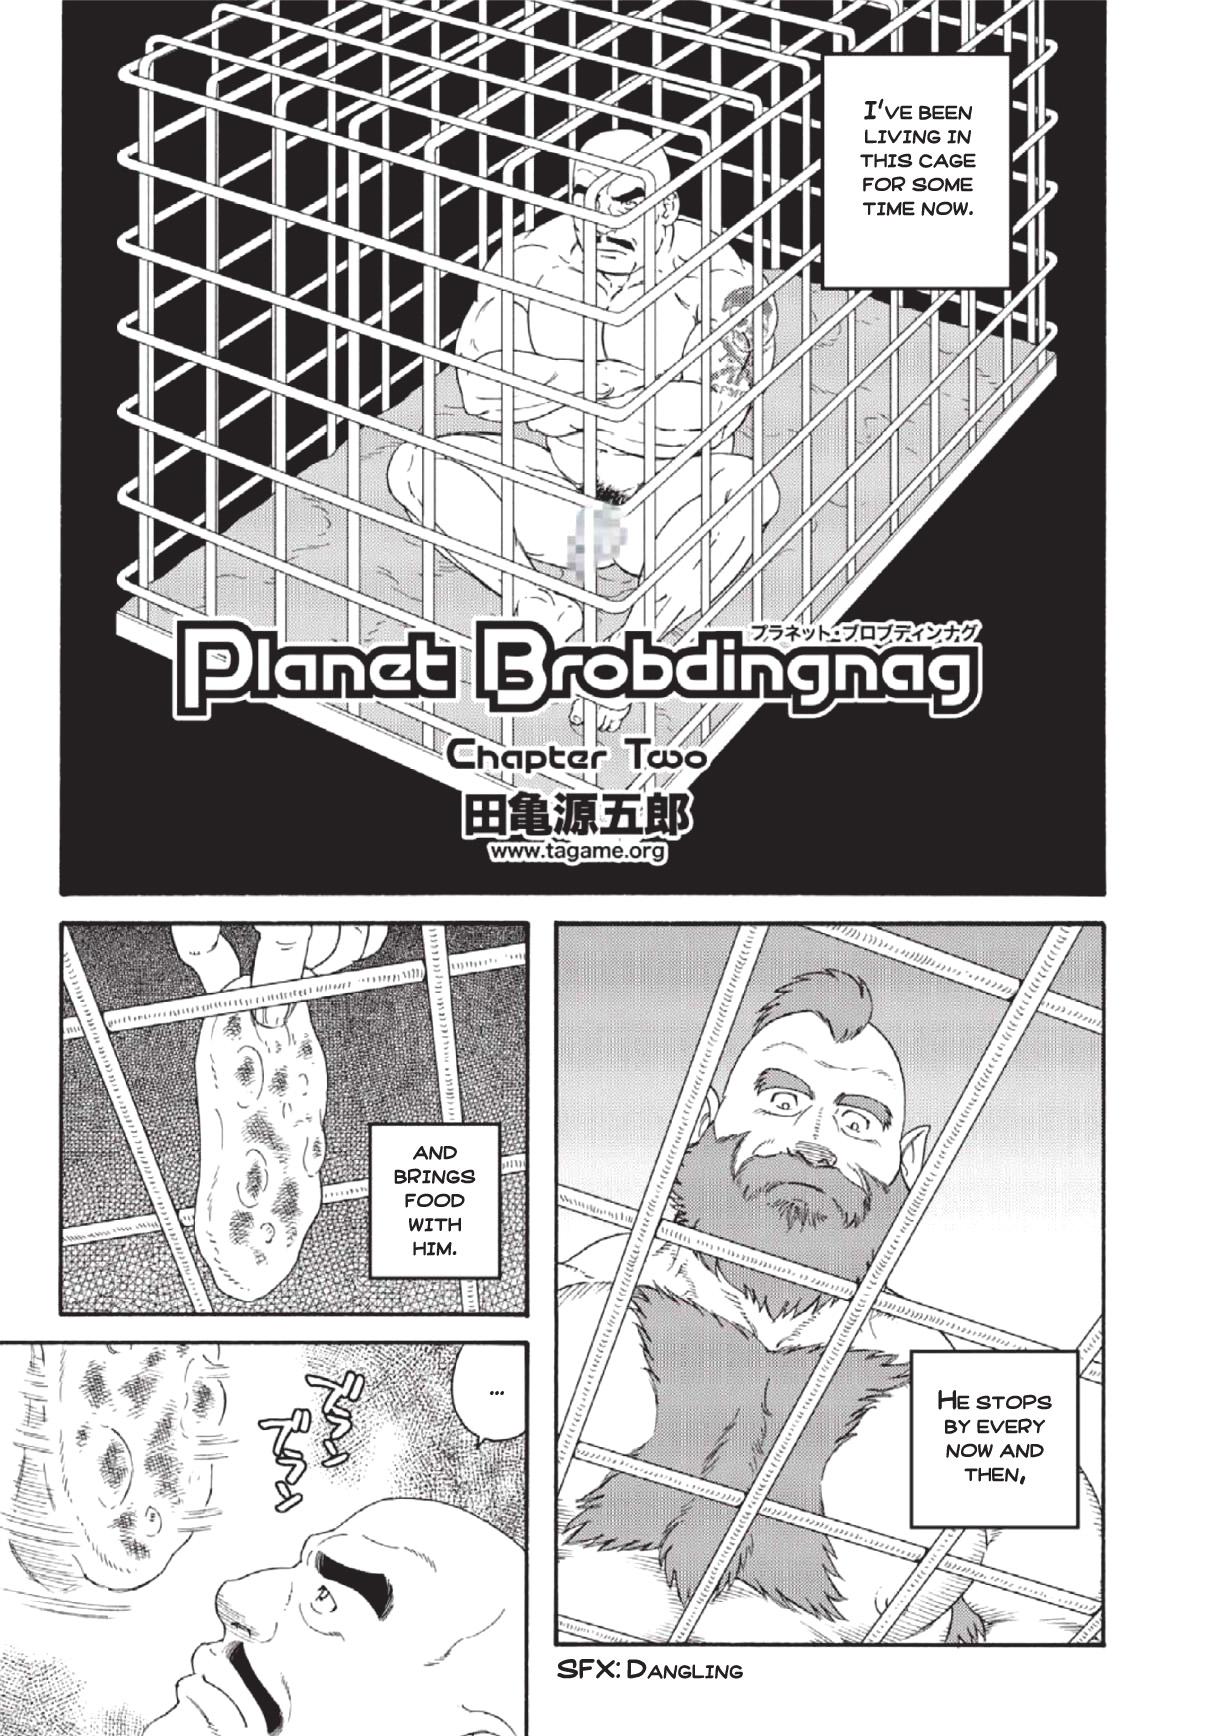 Top Planet Brobdingnag chapter 2 Gag - Page 1